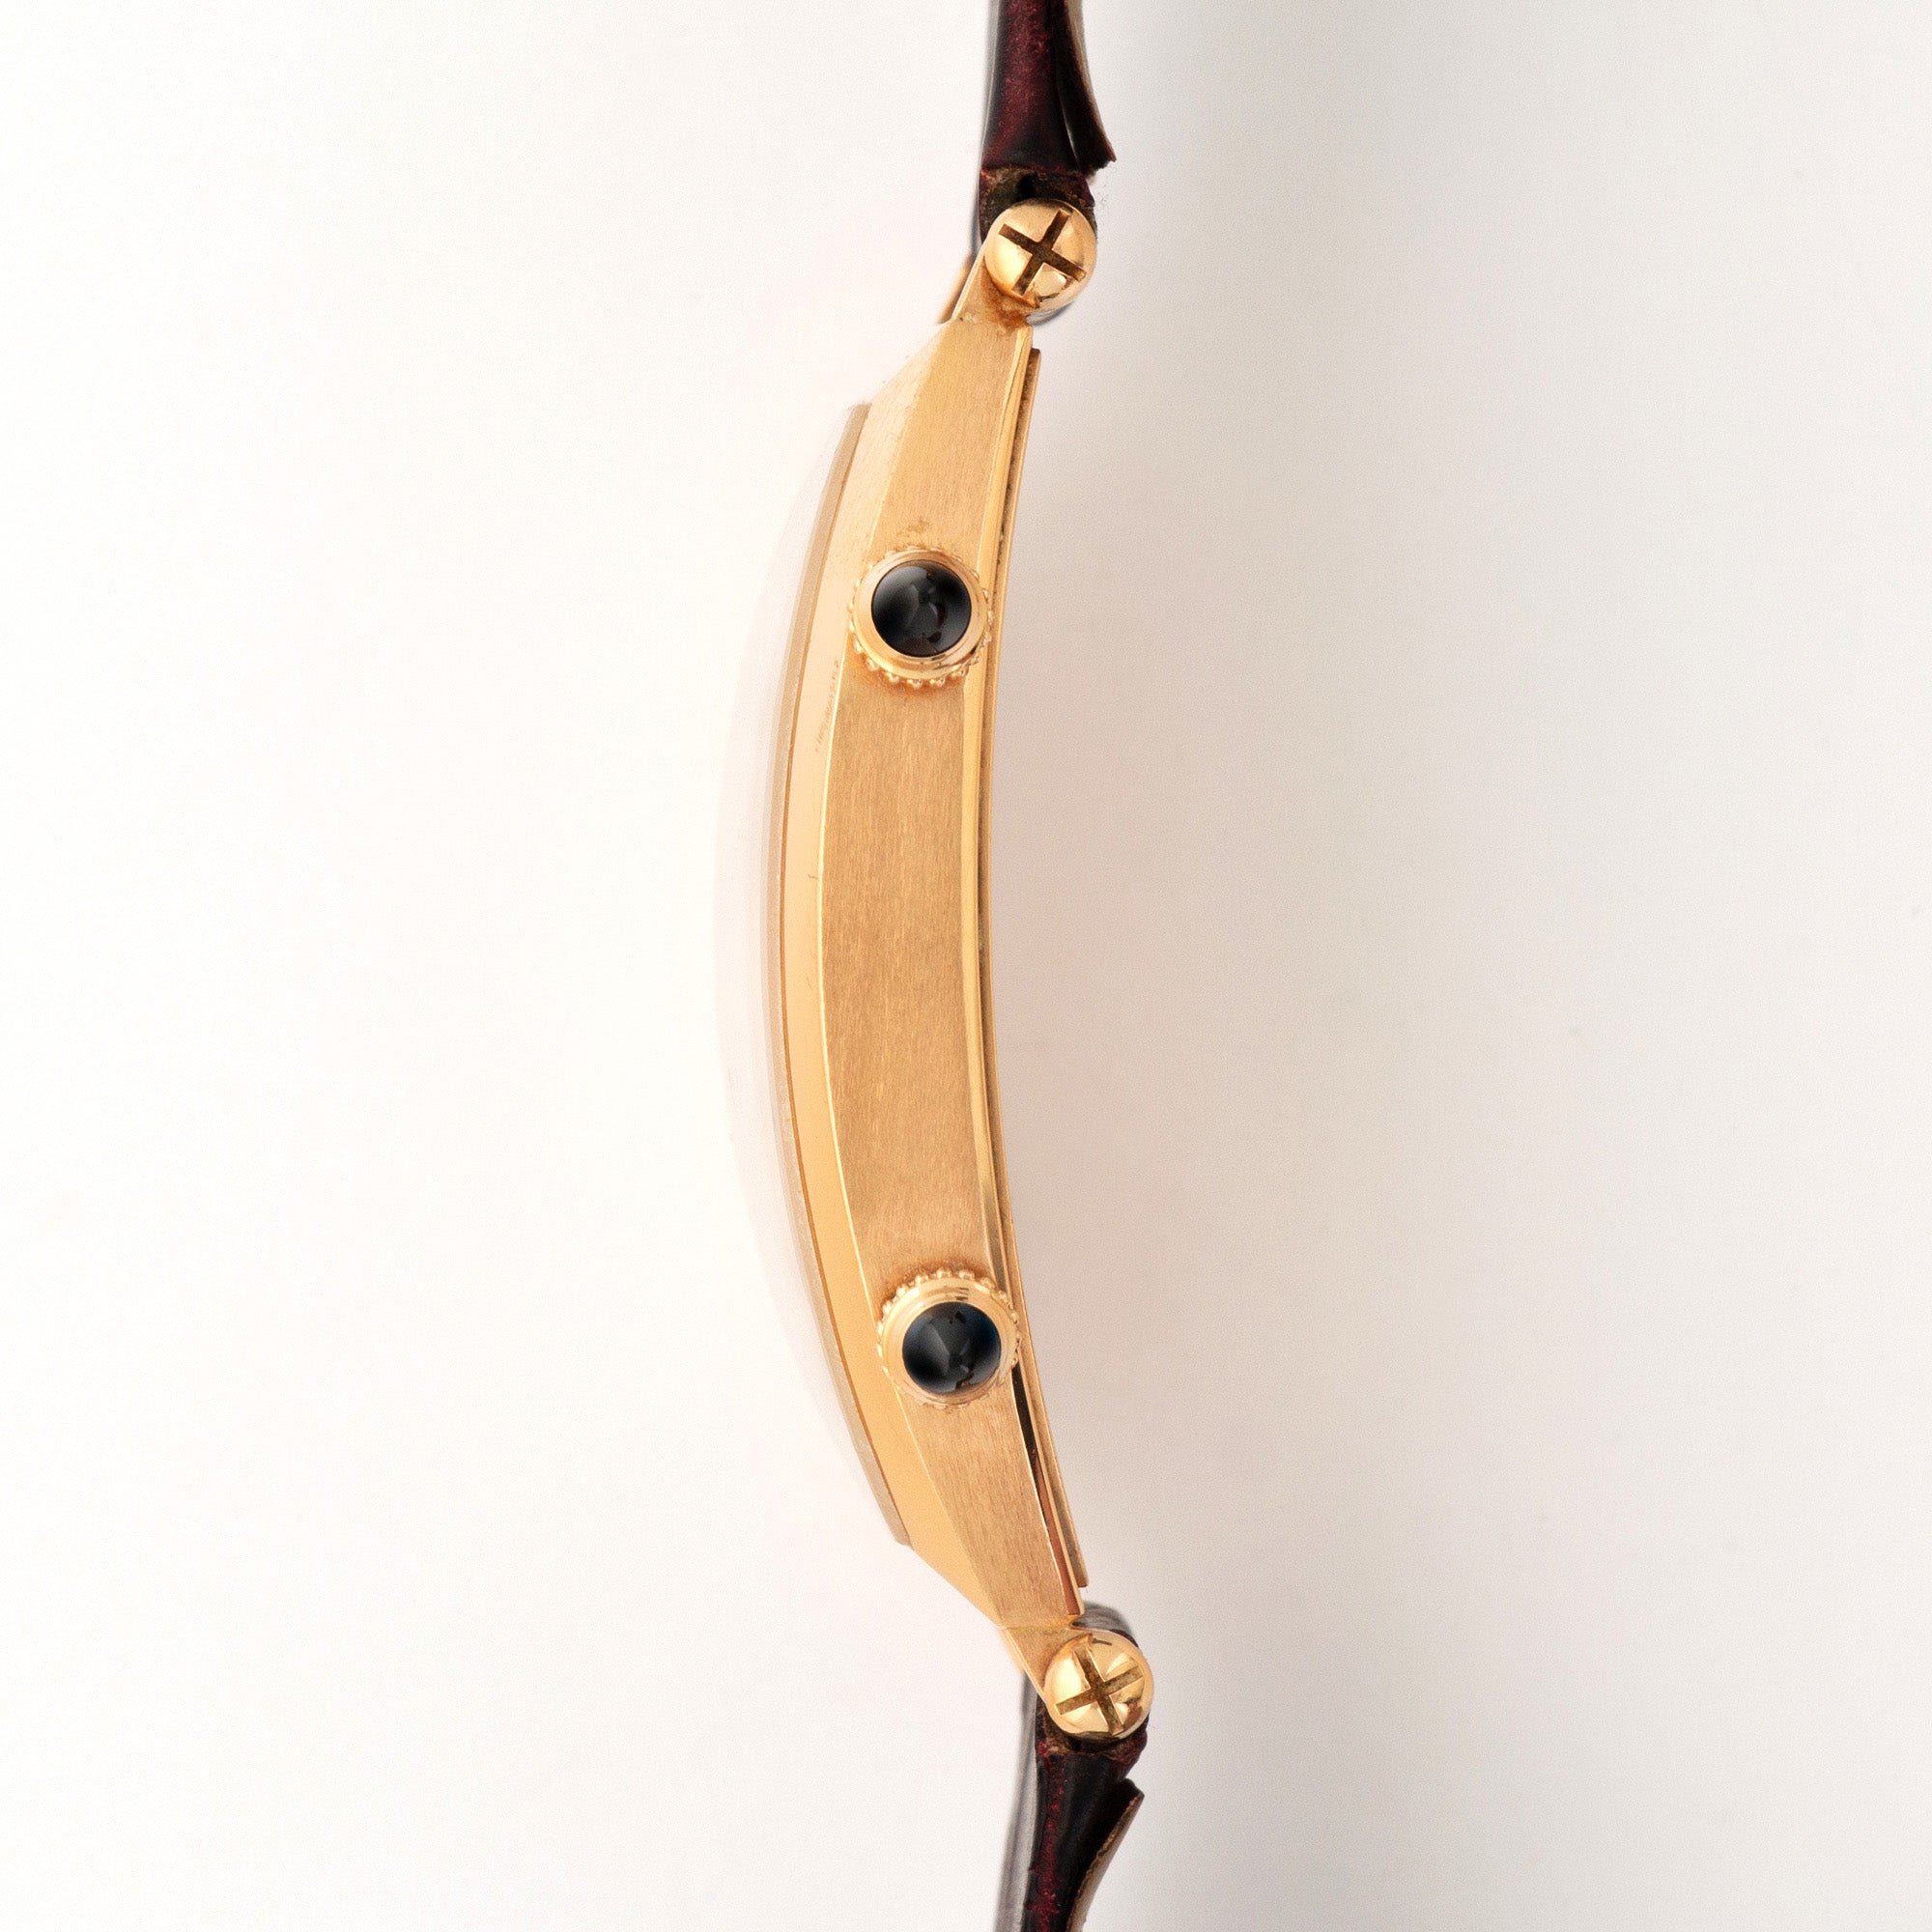 Cartier - Cartier Rose Gold Tonneau Dual Time Zone Watch - The Keystone Watches